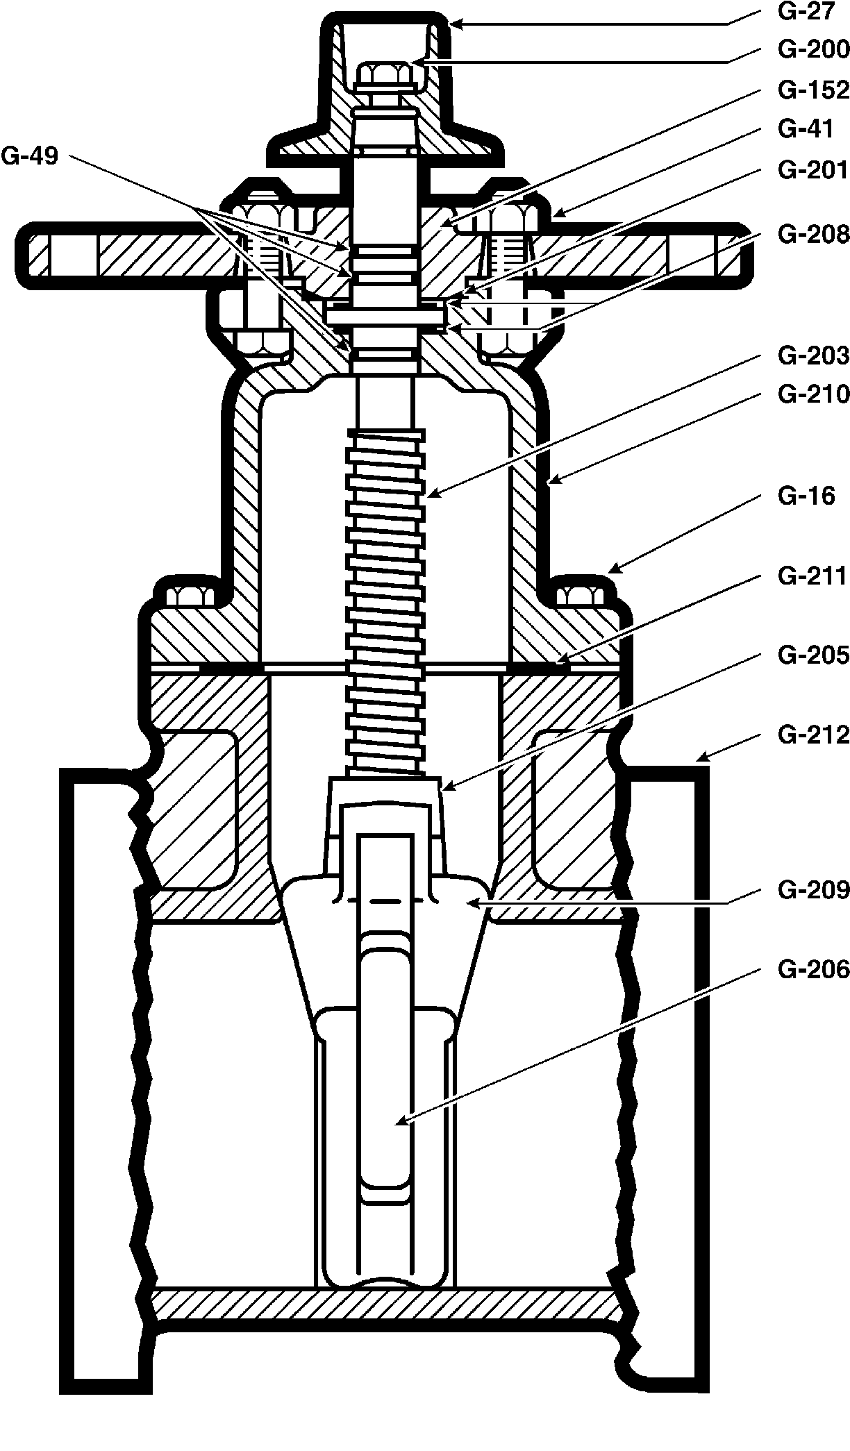 P-USP1-20 MJxMJ 4-12in Parts Drawing